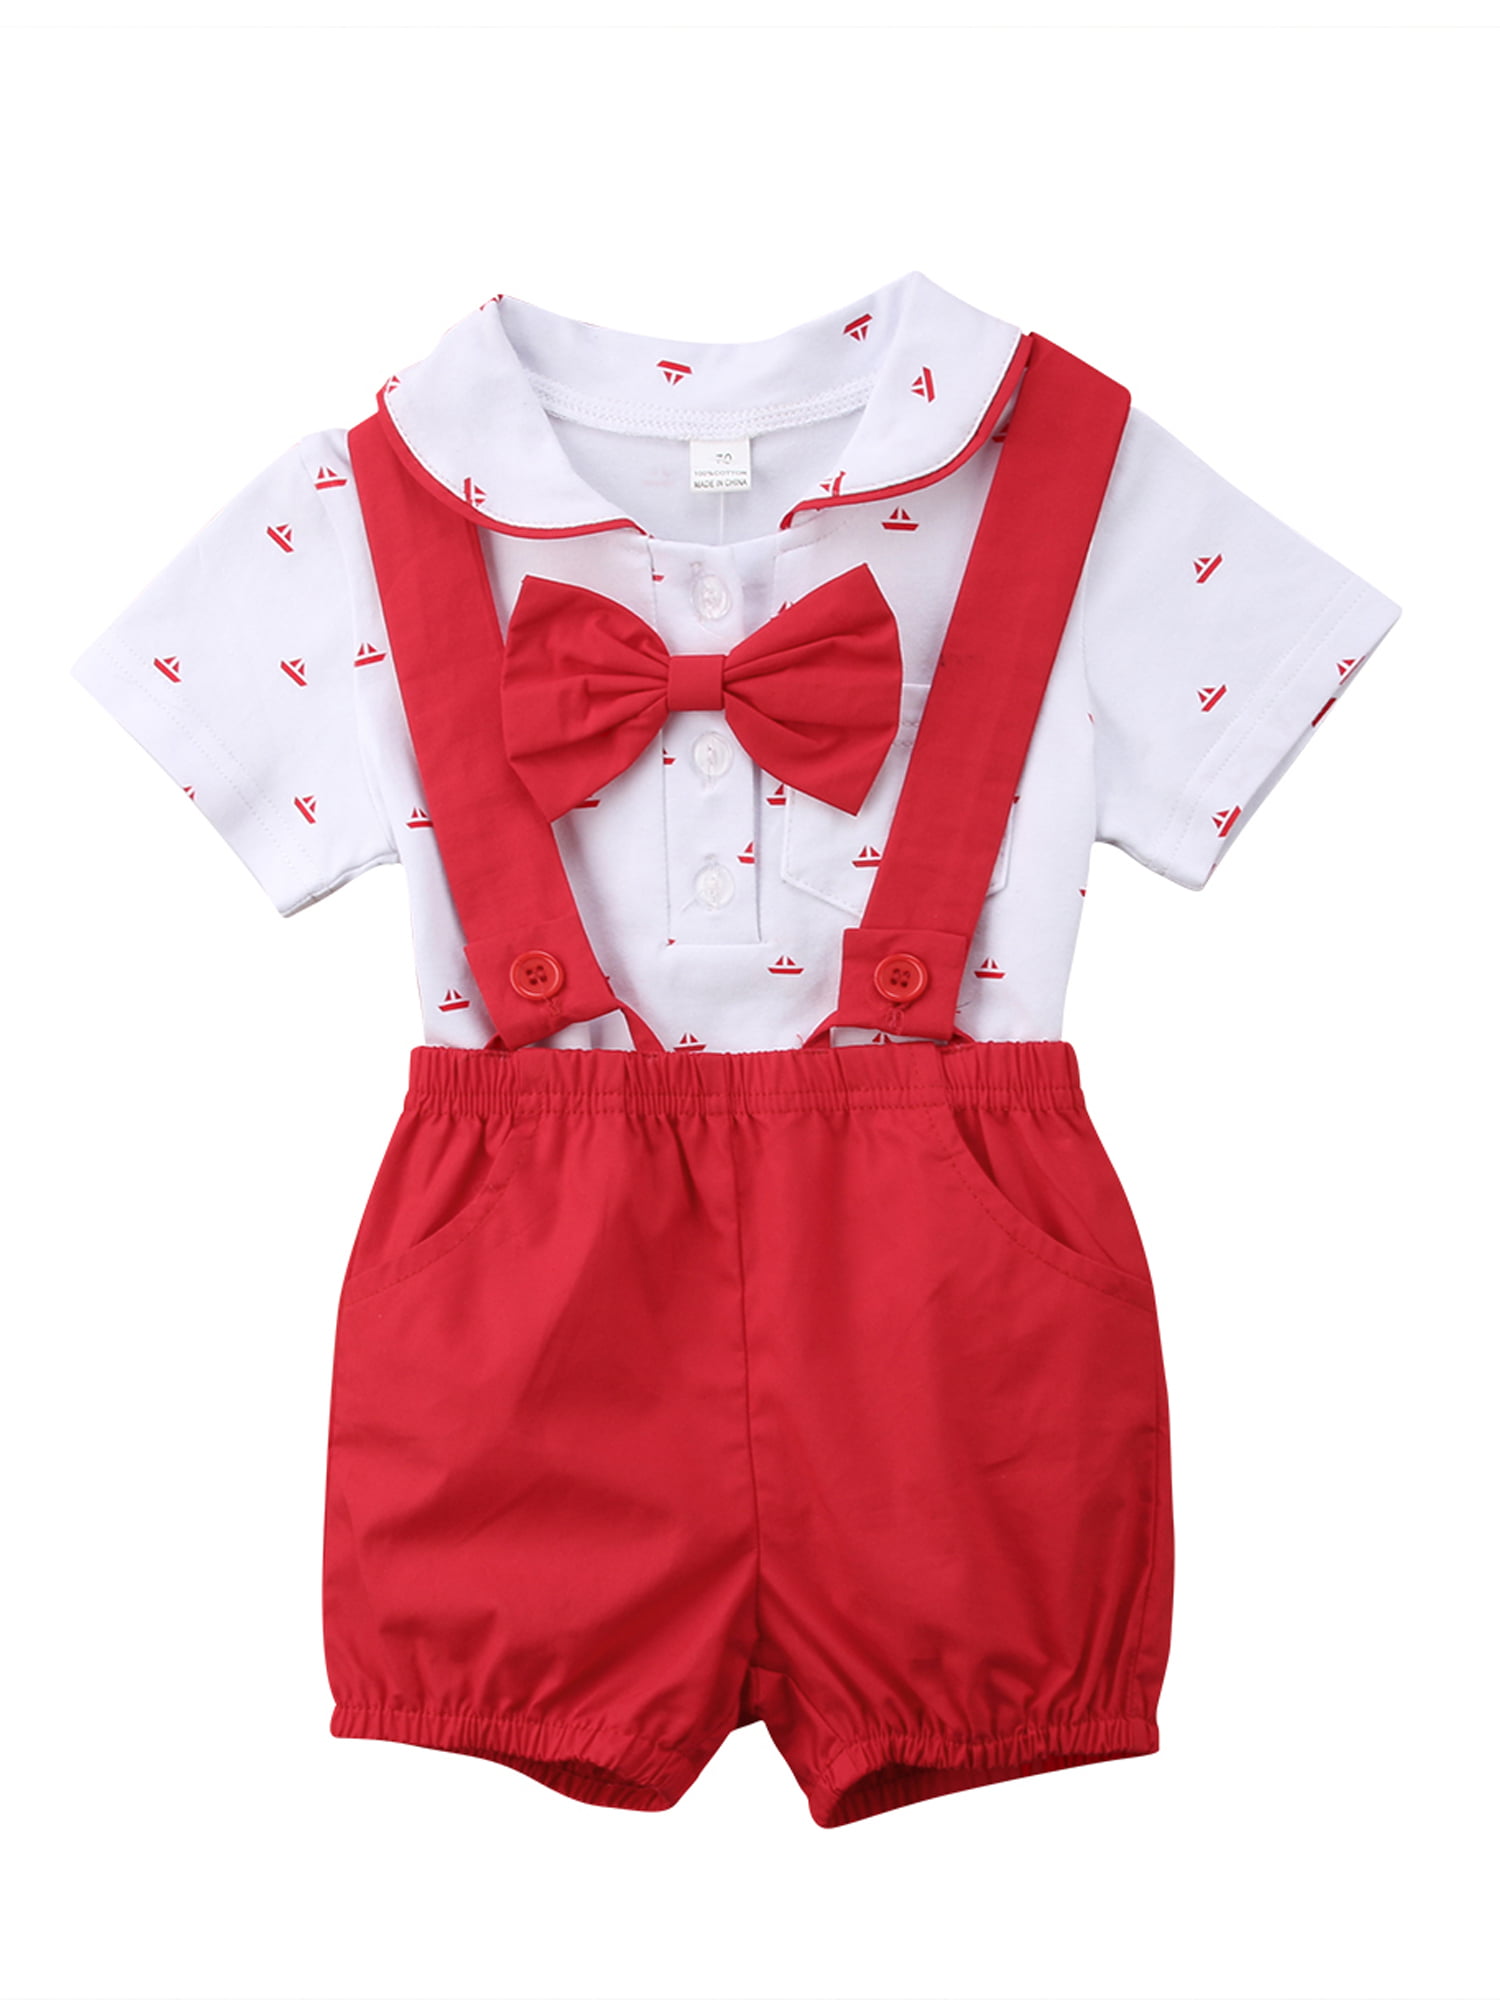 Baby Boy Girl Summer Clothes Overalls Outfits T-shirt+Bib Pants 2pcs Set 0-24M 